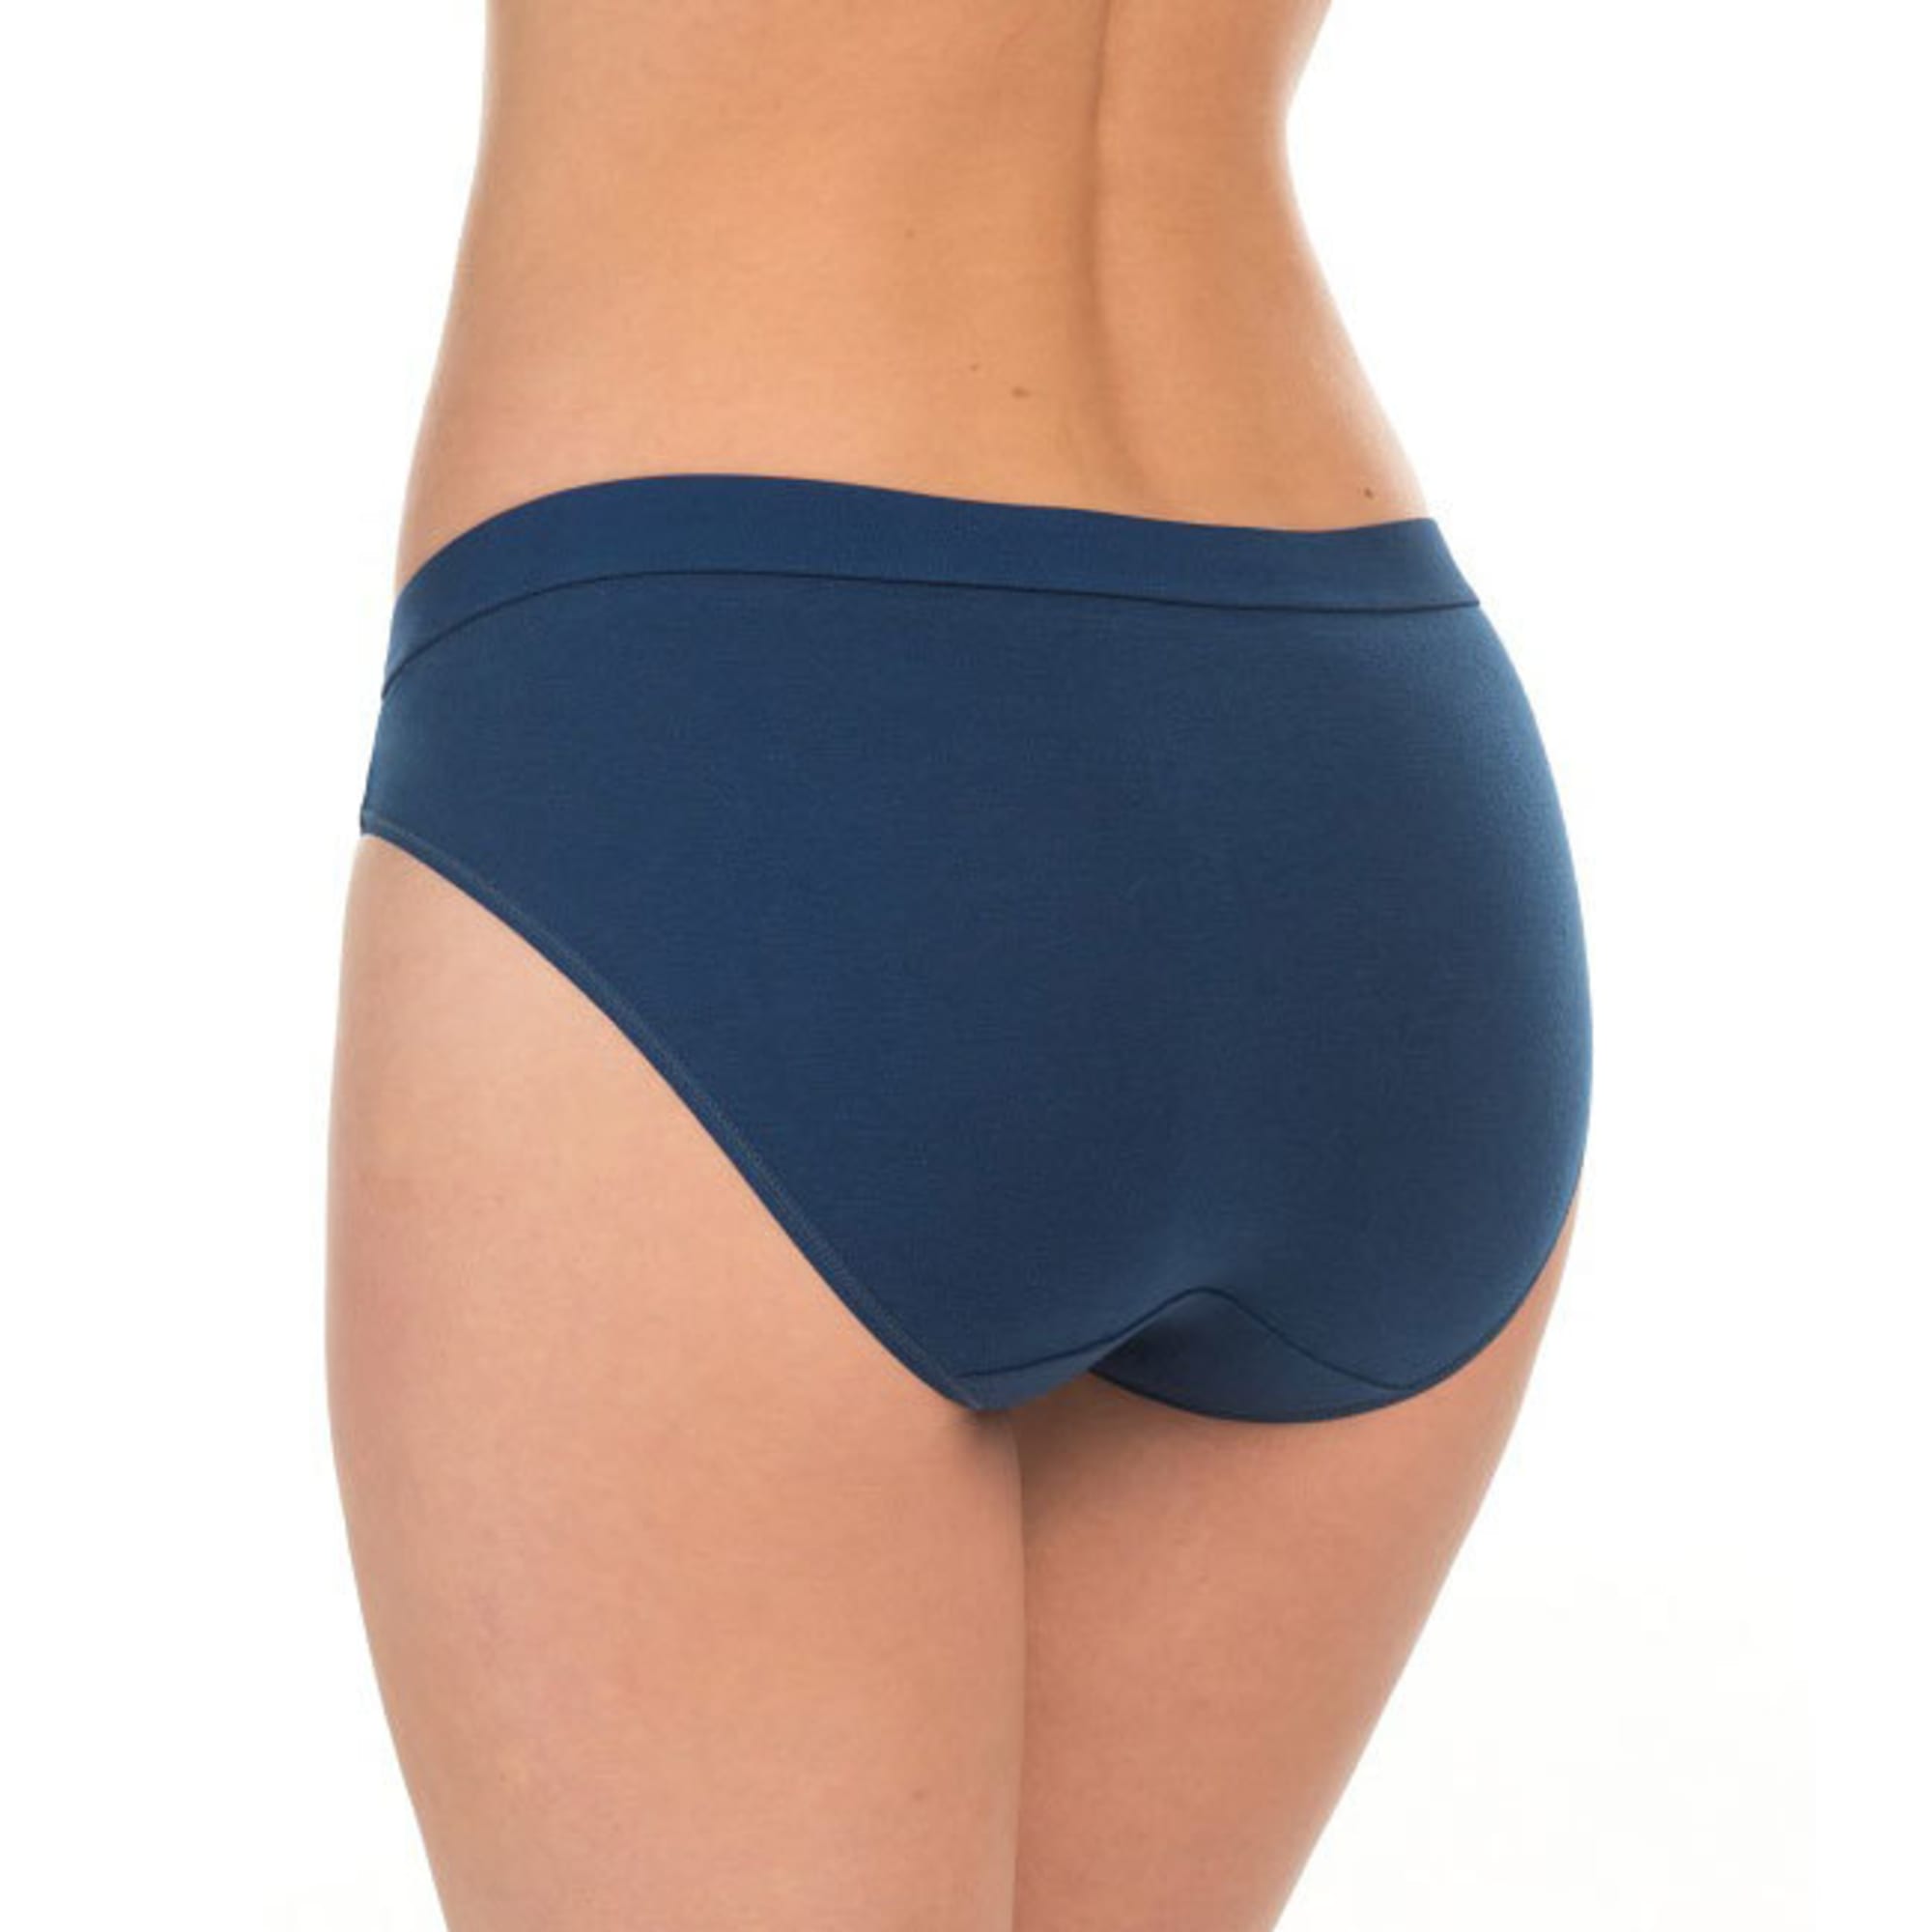 Hanes Ultimate Women's X-Temp Bikini Underwear, 3-Pack